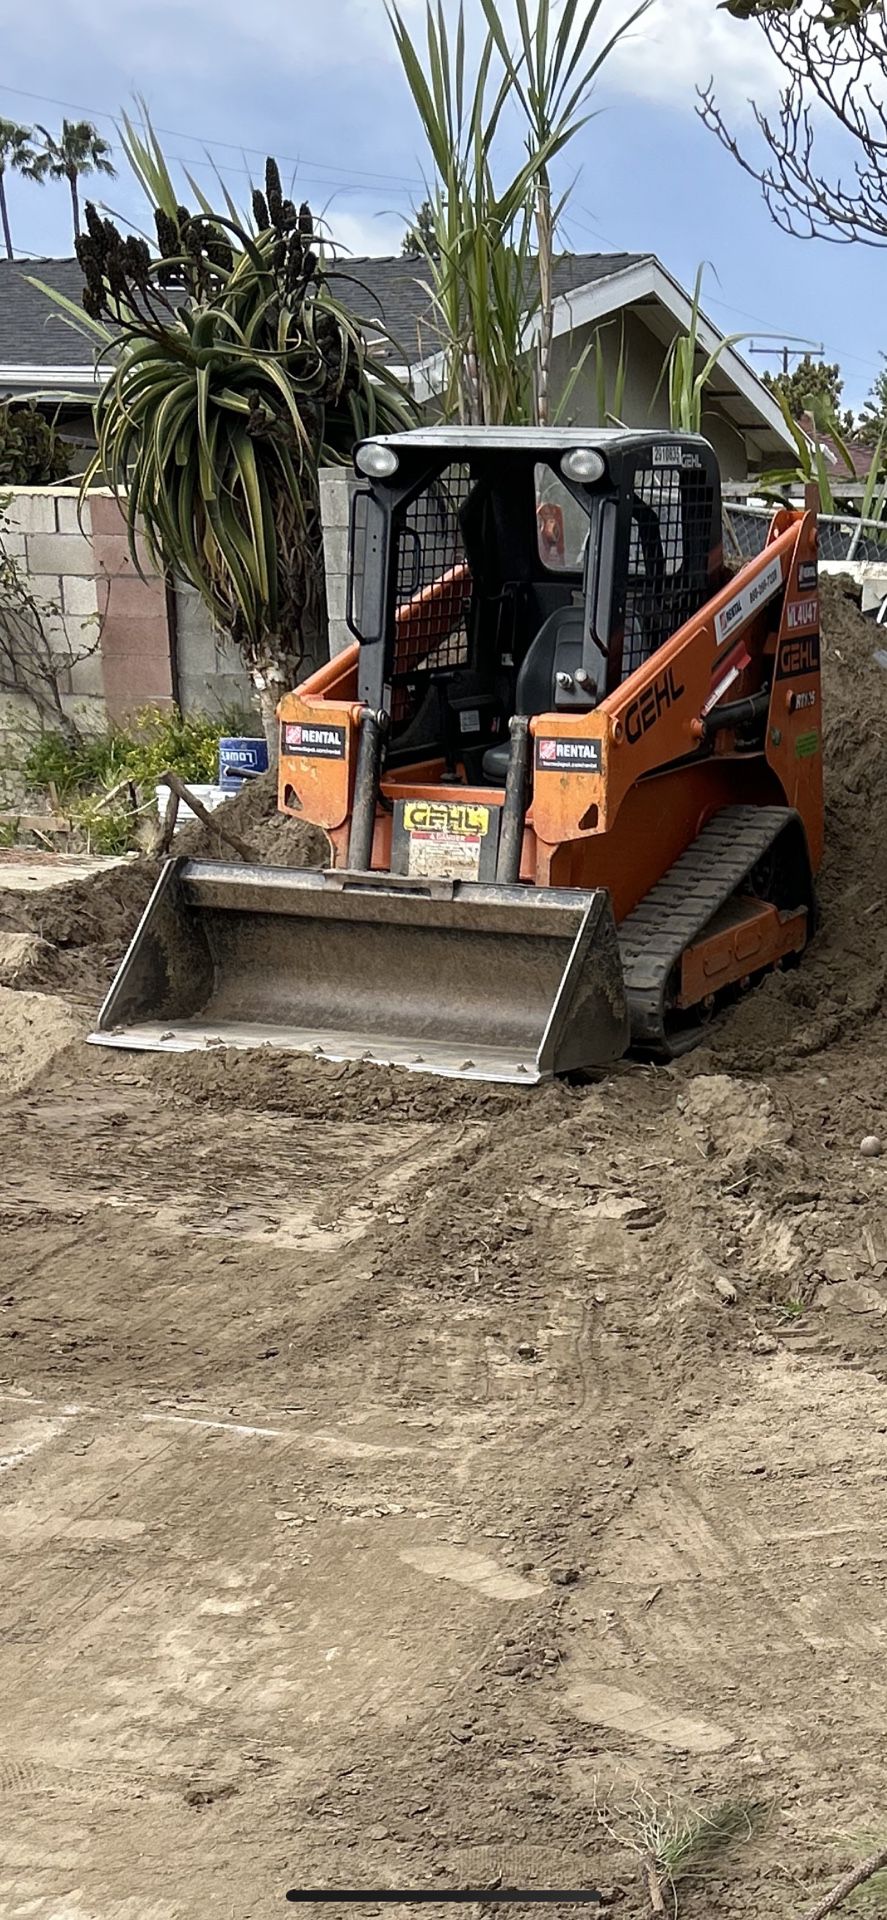 Demo Work Excavation 